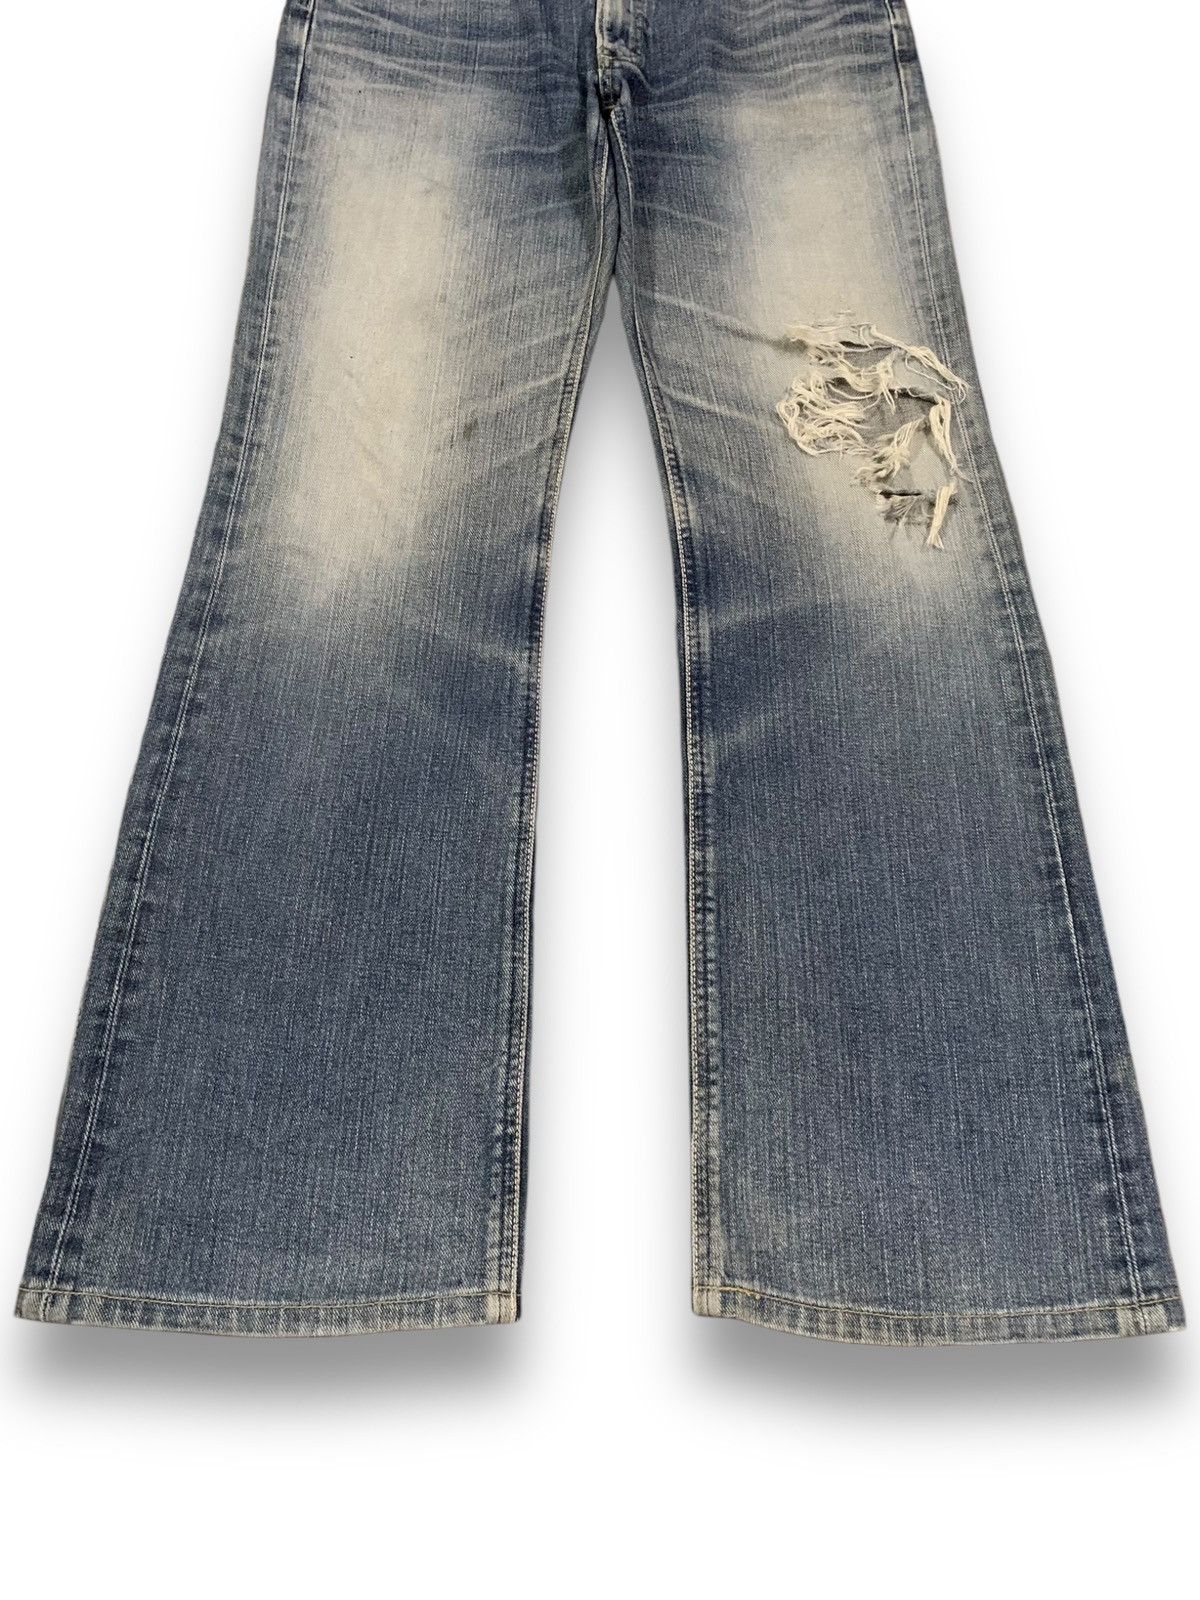 Lee Vintage Lee Cowboy Sanforized Distressed Flared Jeans Size US 31 - 9 Thumbnail